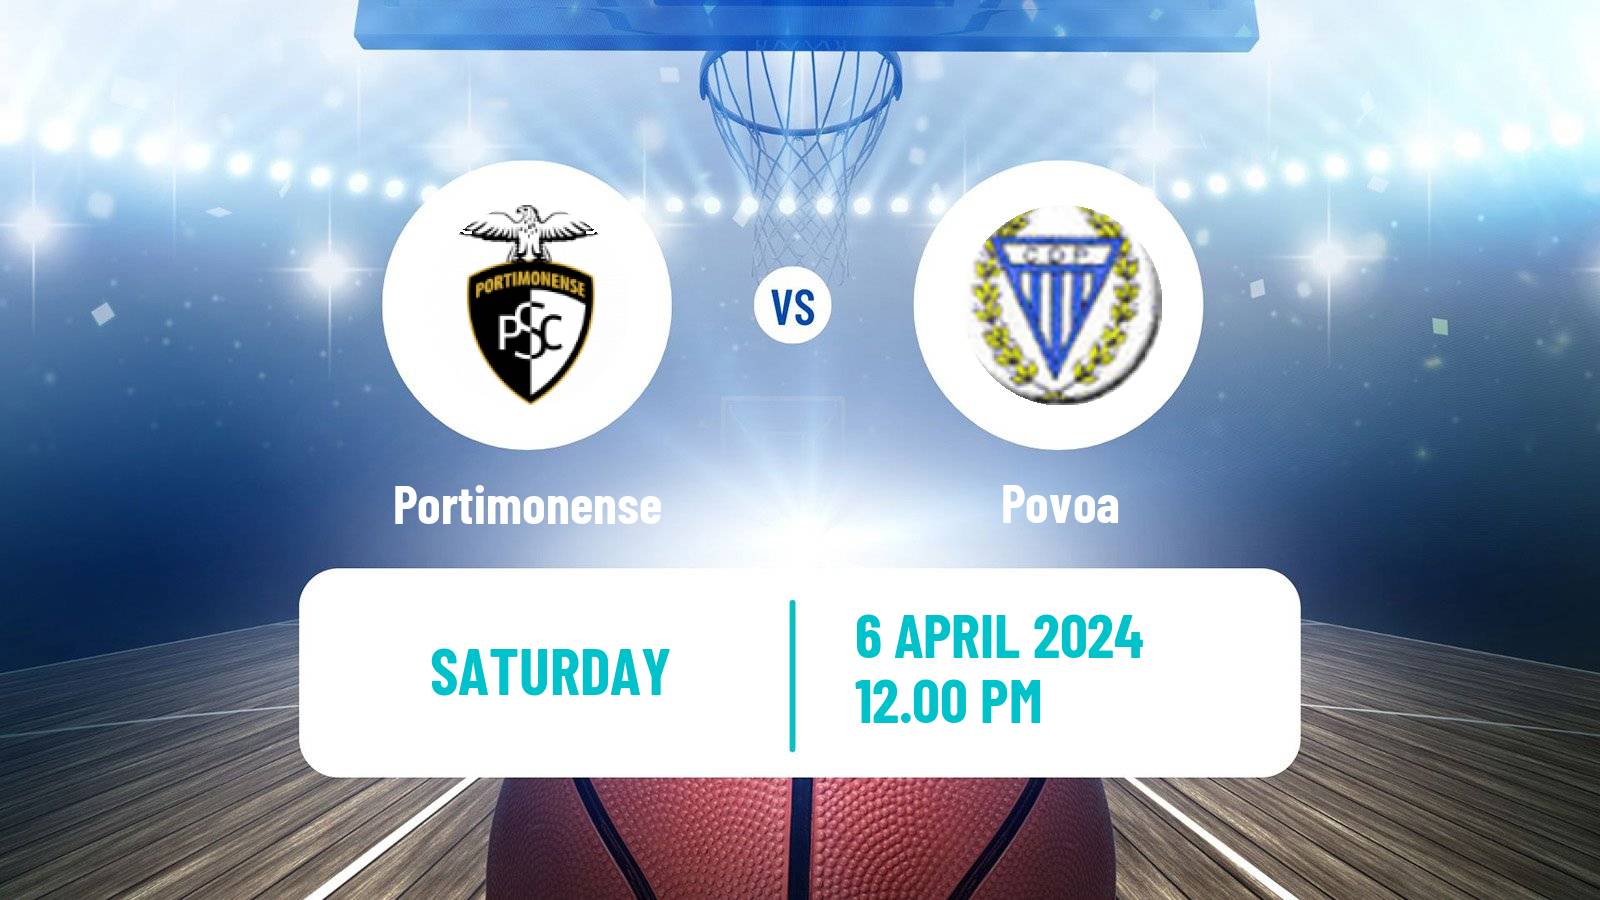 Basketball Portuguese LPB Portimonense - Povoa